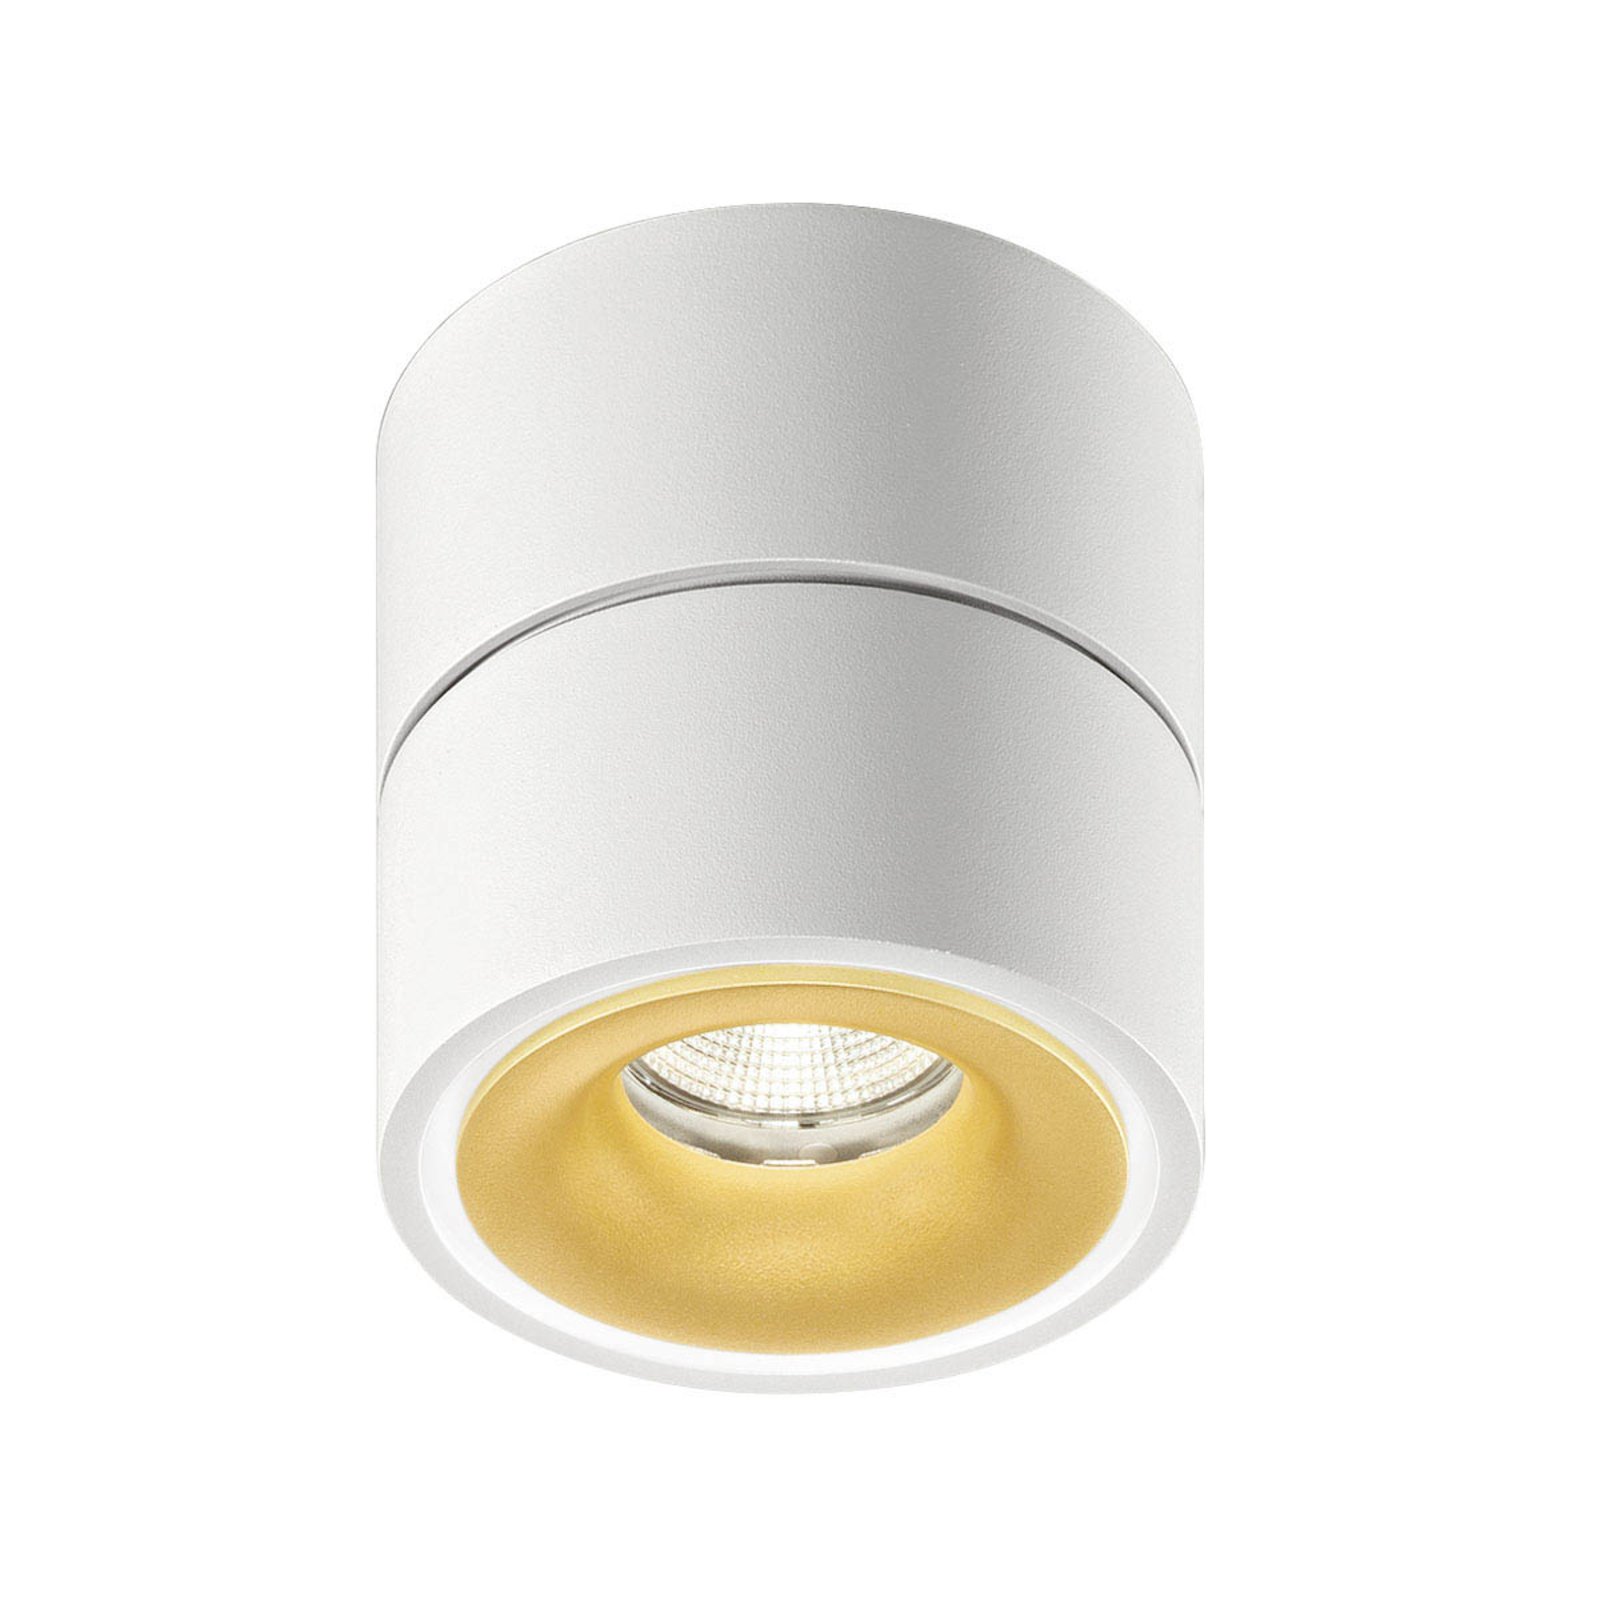 Egger Clippo S LED plafondspot, wit-goud